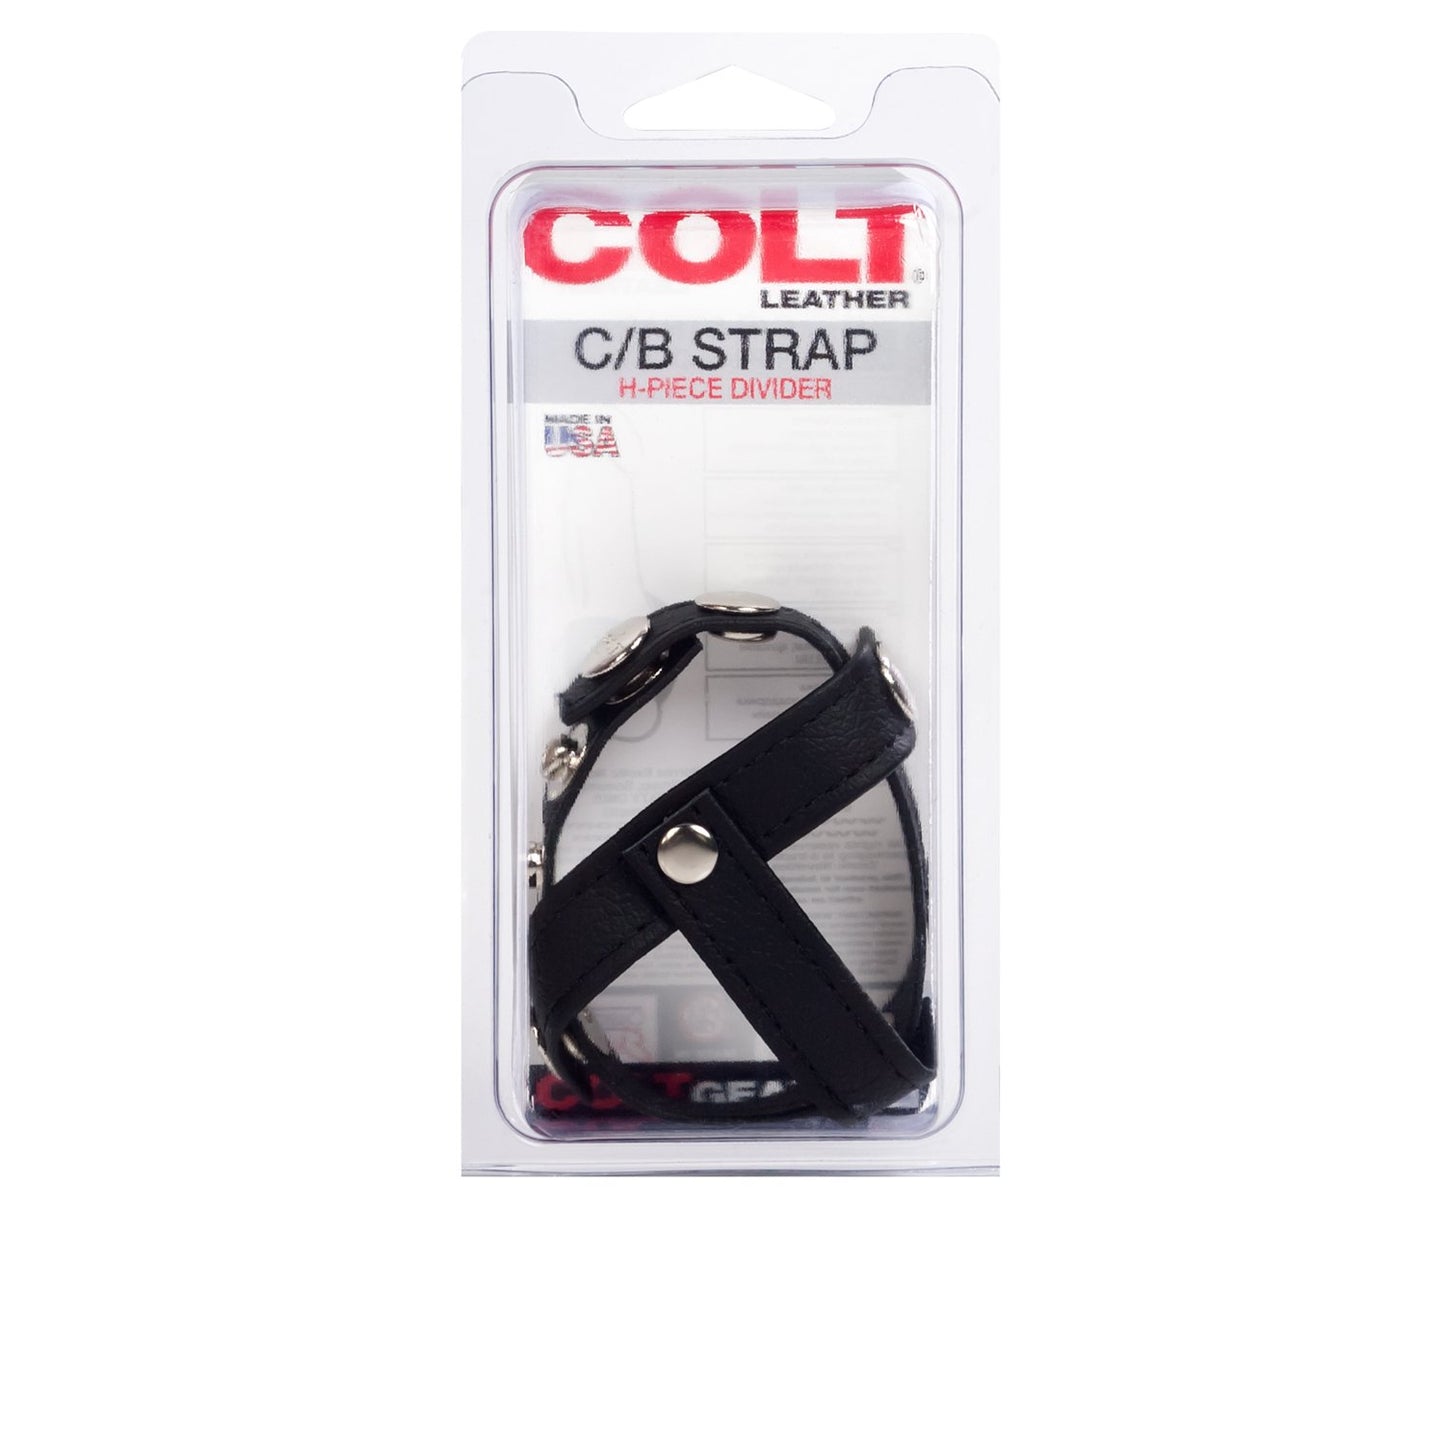 COLT Leather C/B Strap H-Piece Divider